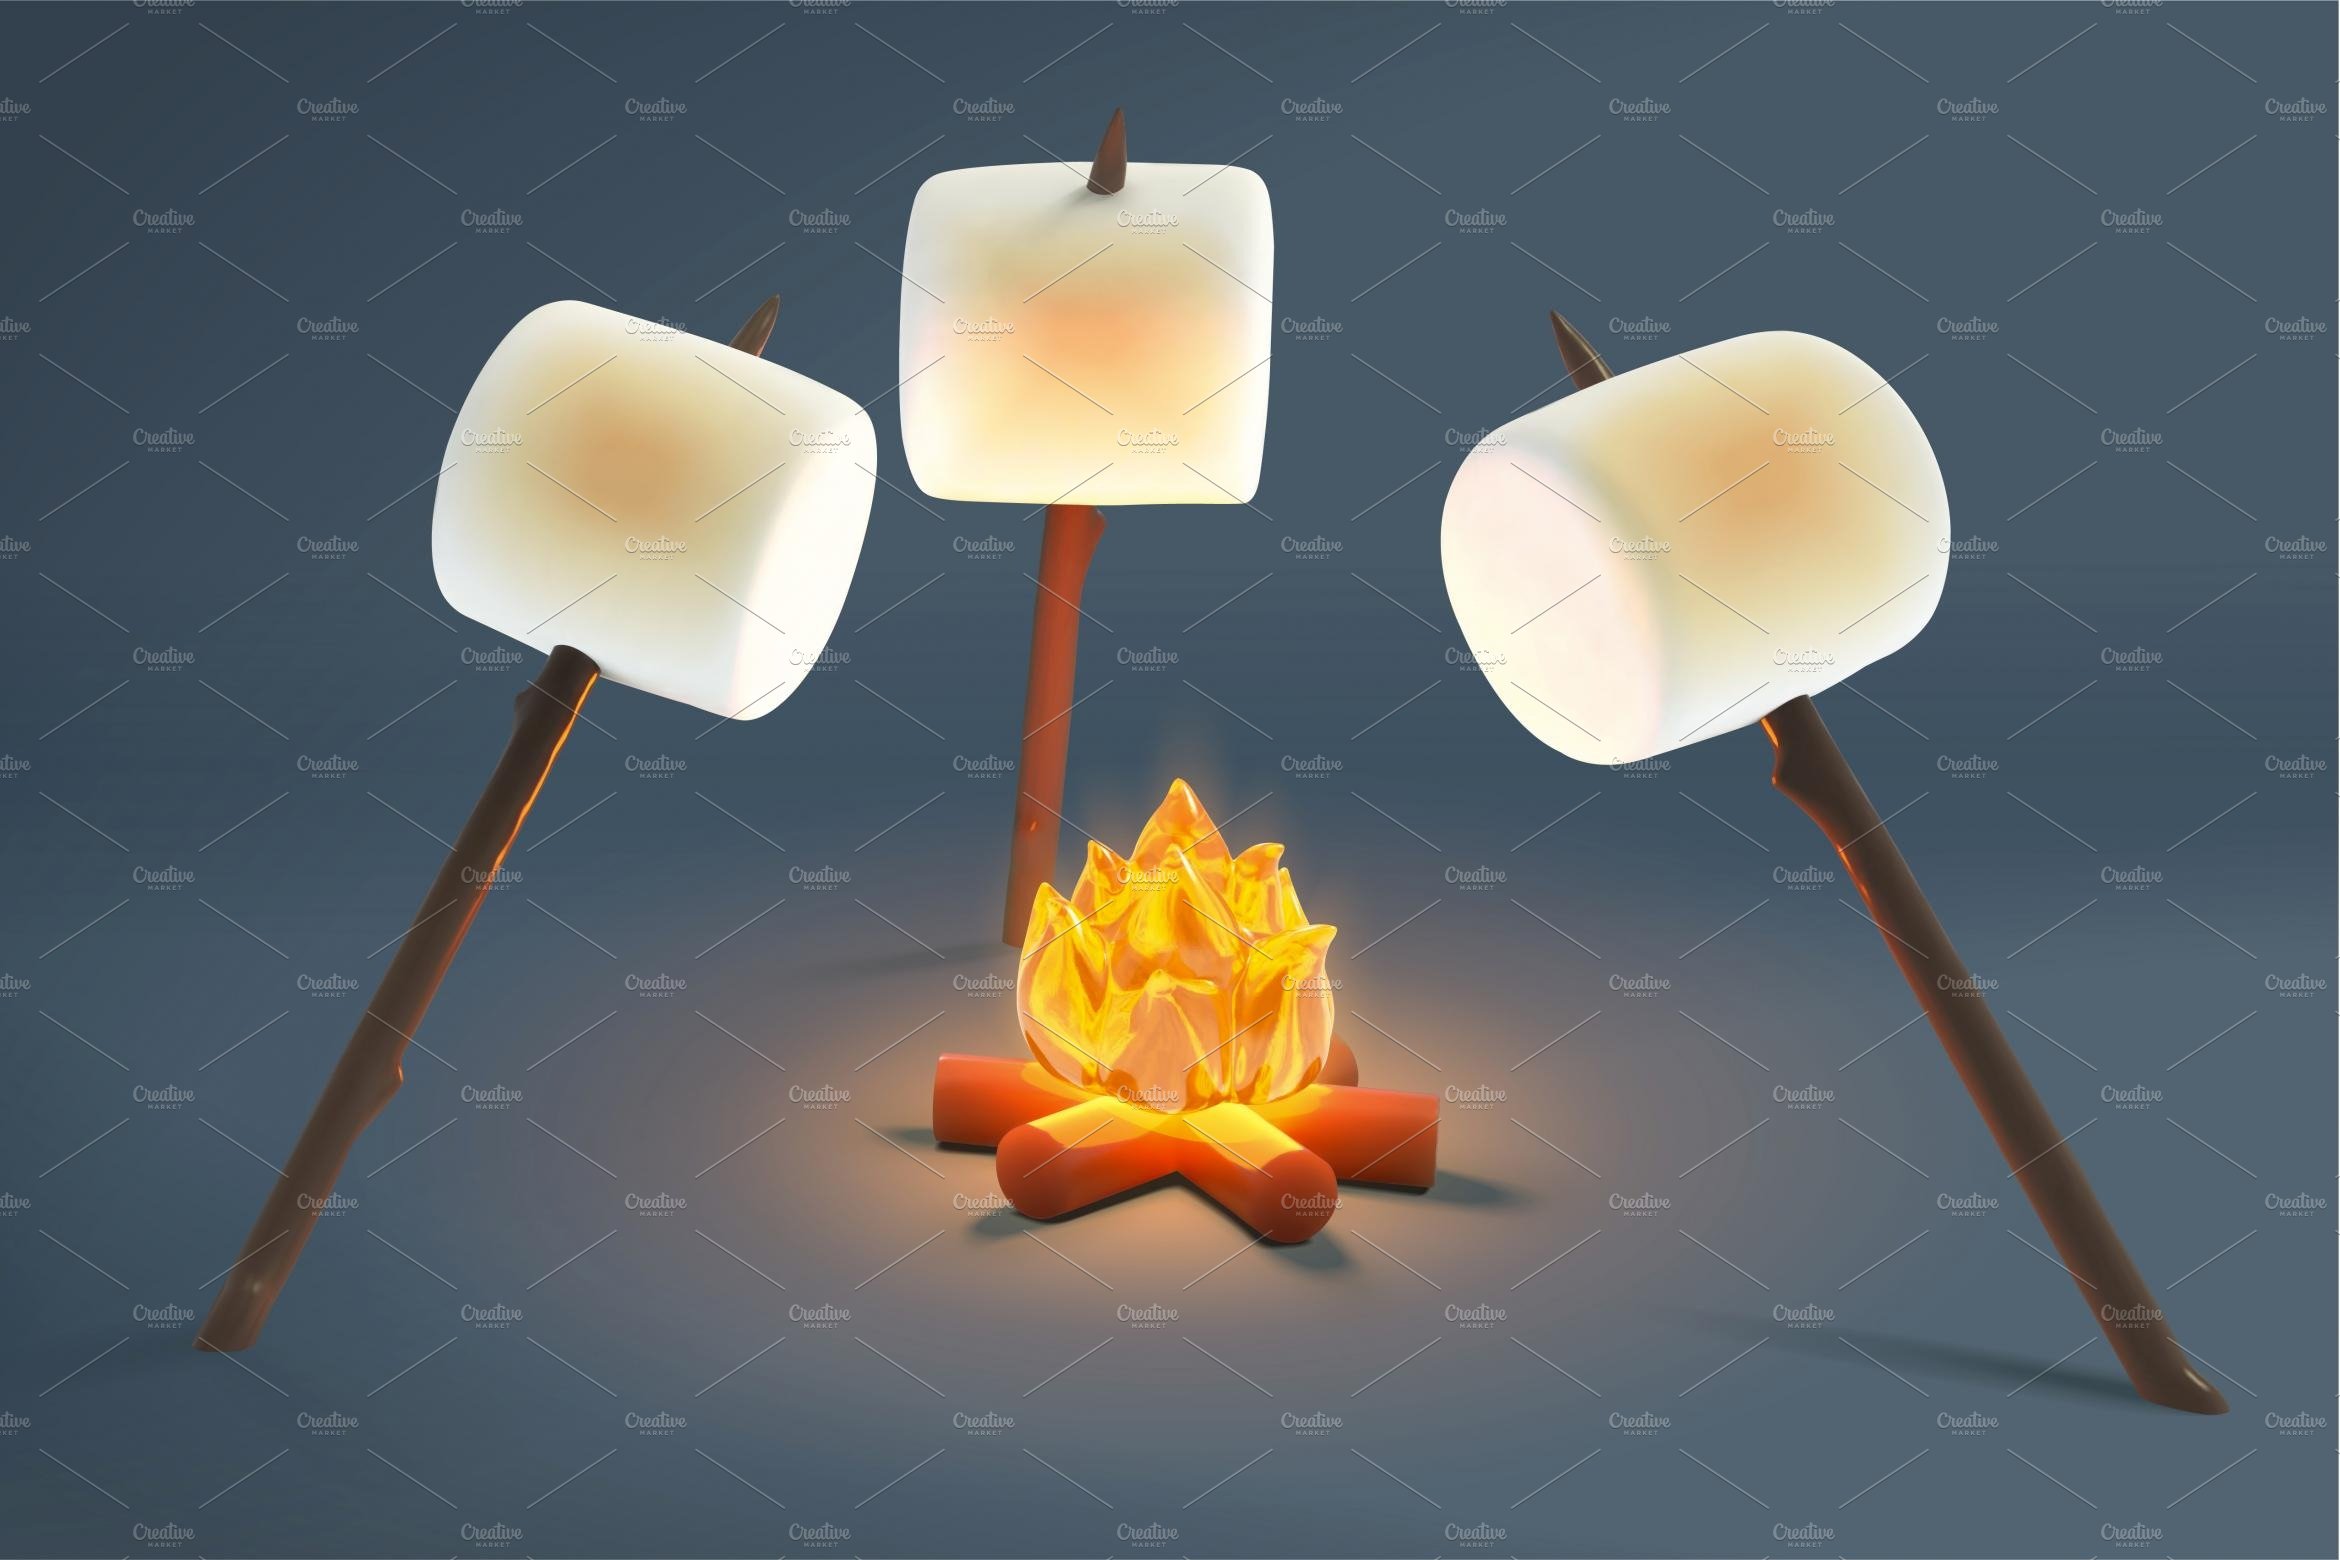 Roasting of marshmallows on bonfire cover image.